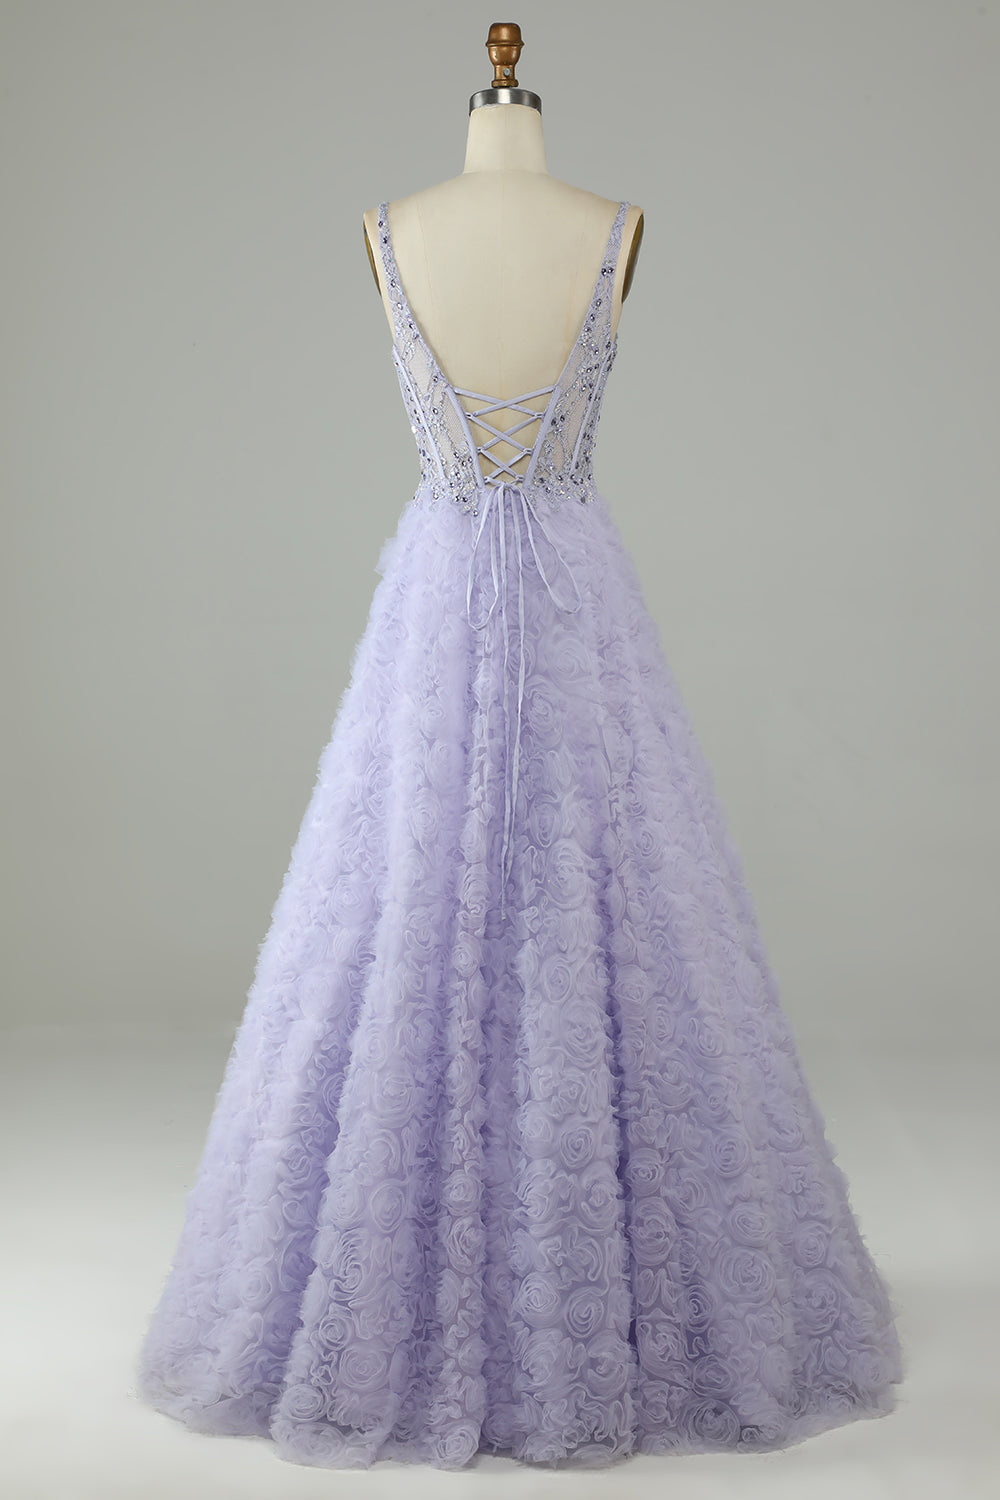 Romantic Purple A-Line Tulle Formal Dress With Rhinestone